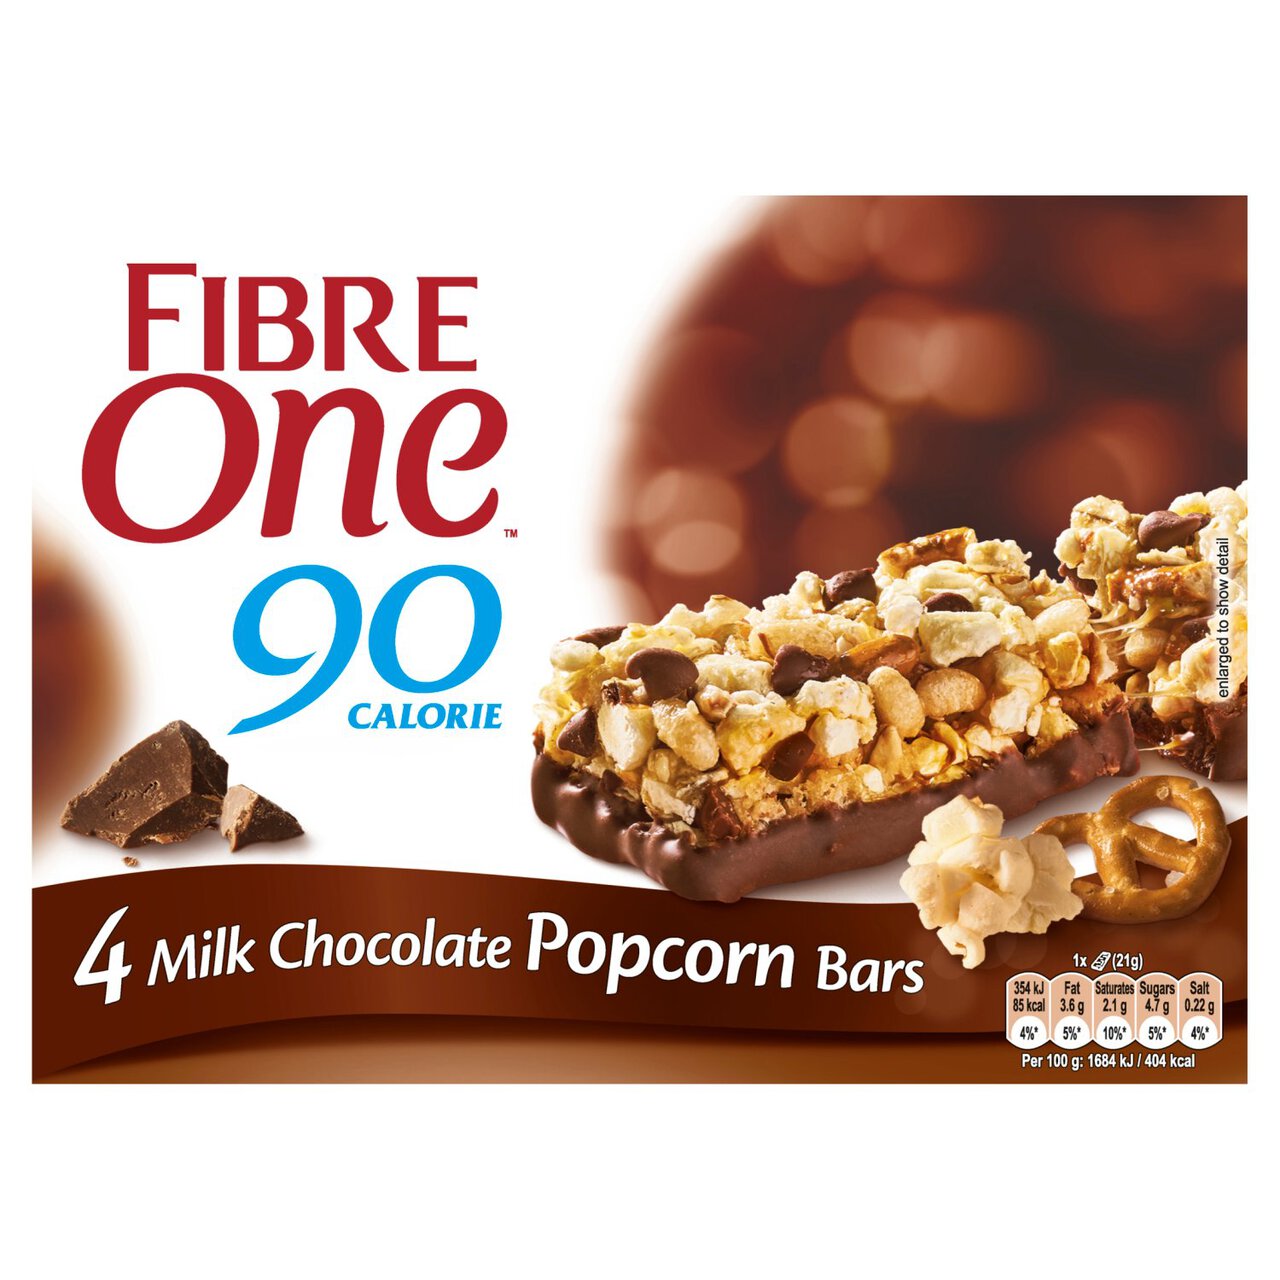 Fibre One 90 Calorie Milk Chocolate Popcorn Bars 4 x 21g